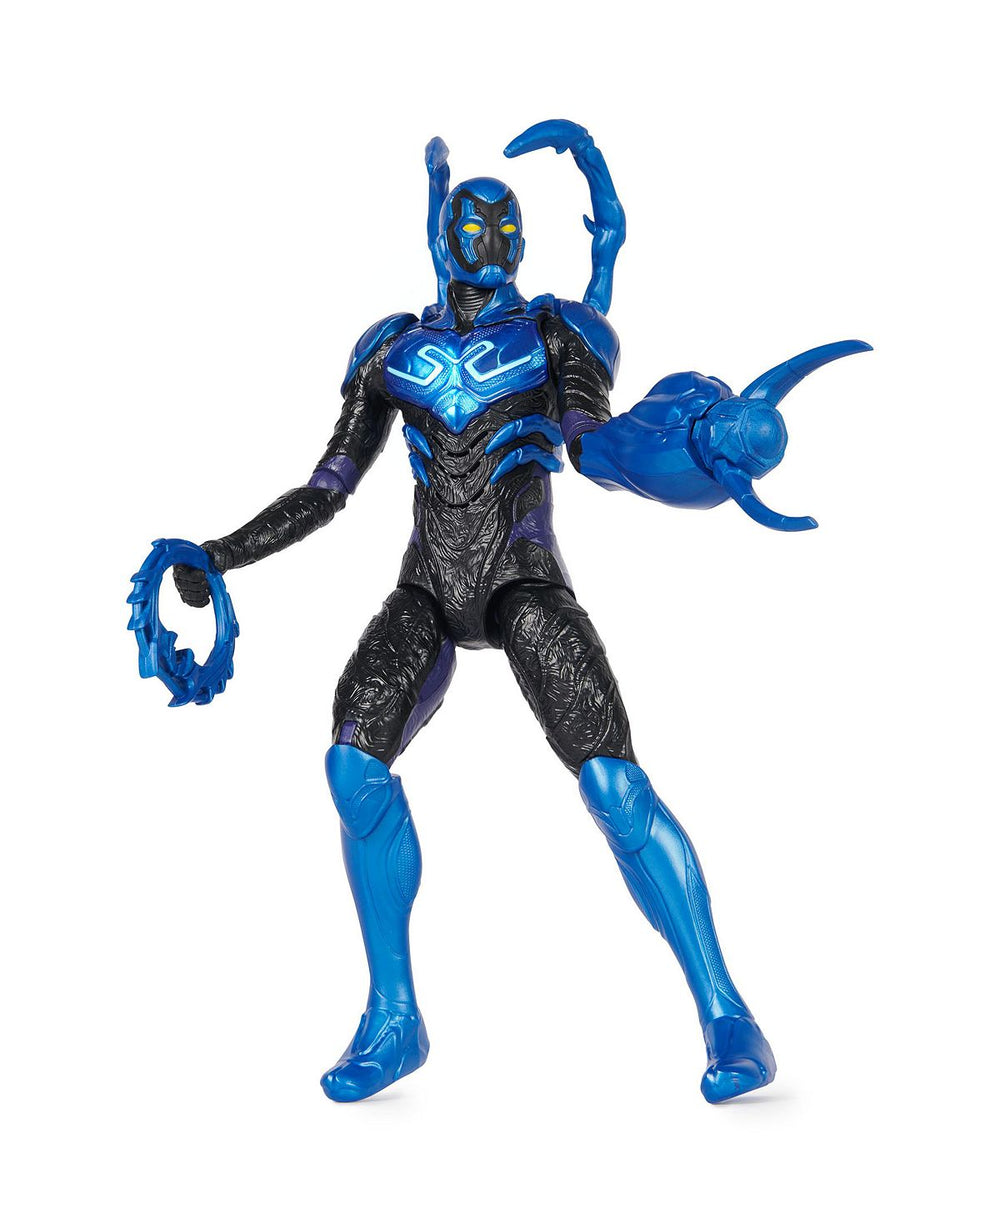 DC Comics Blue Beetle 12" Action Figure with Lights, Sounds & Accessories